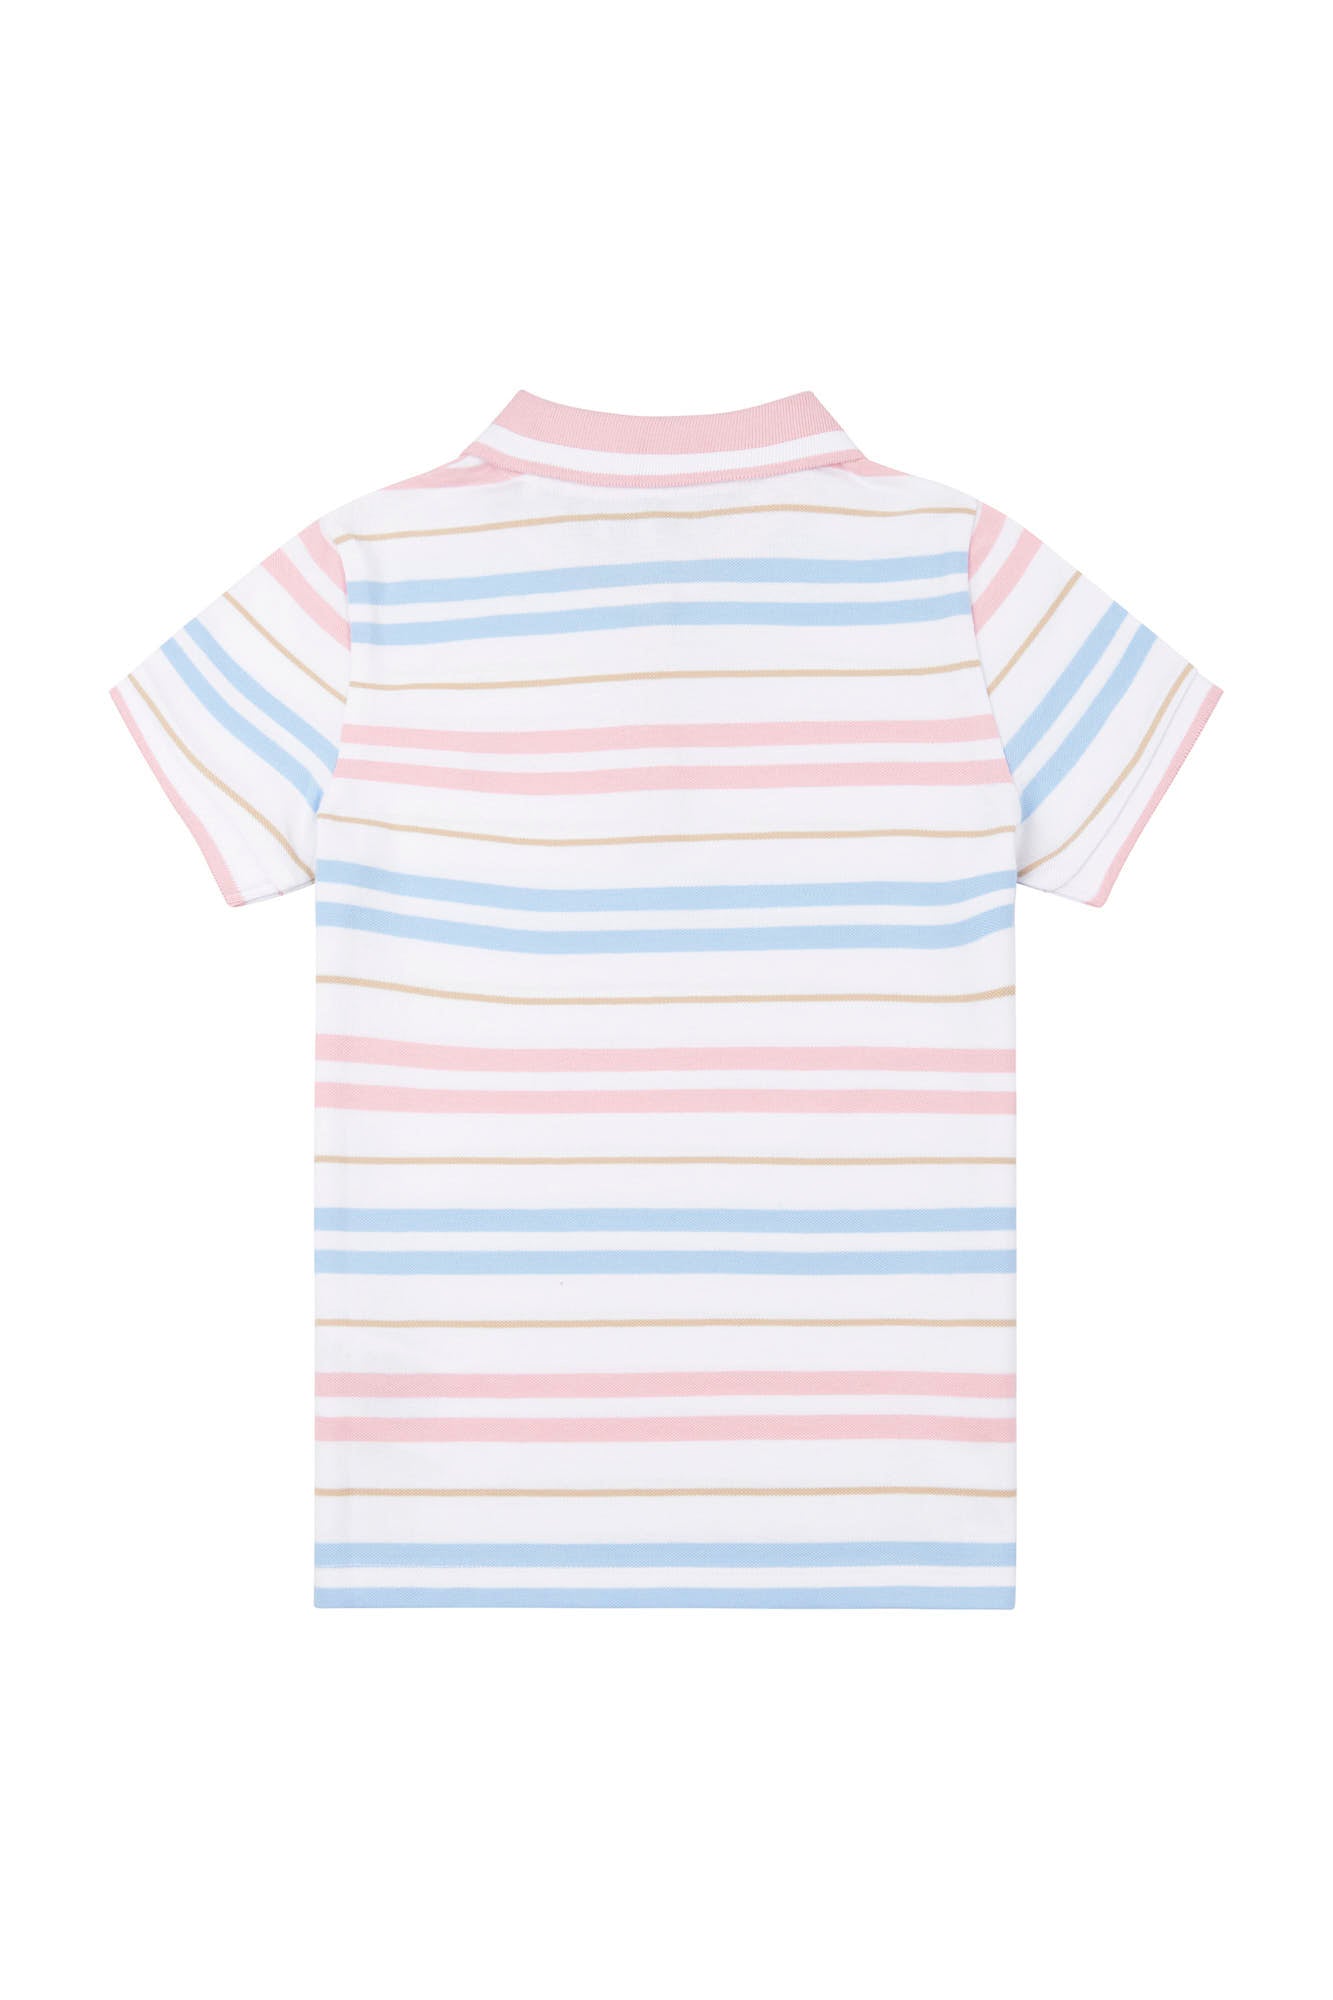 Girls Stripe Pique Polo Shirt in Romance Rose